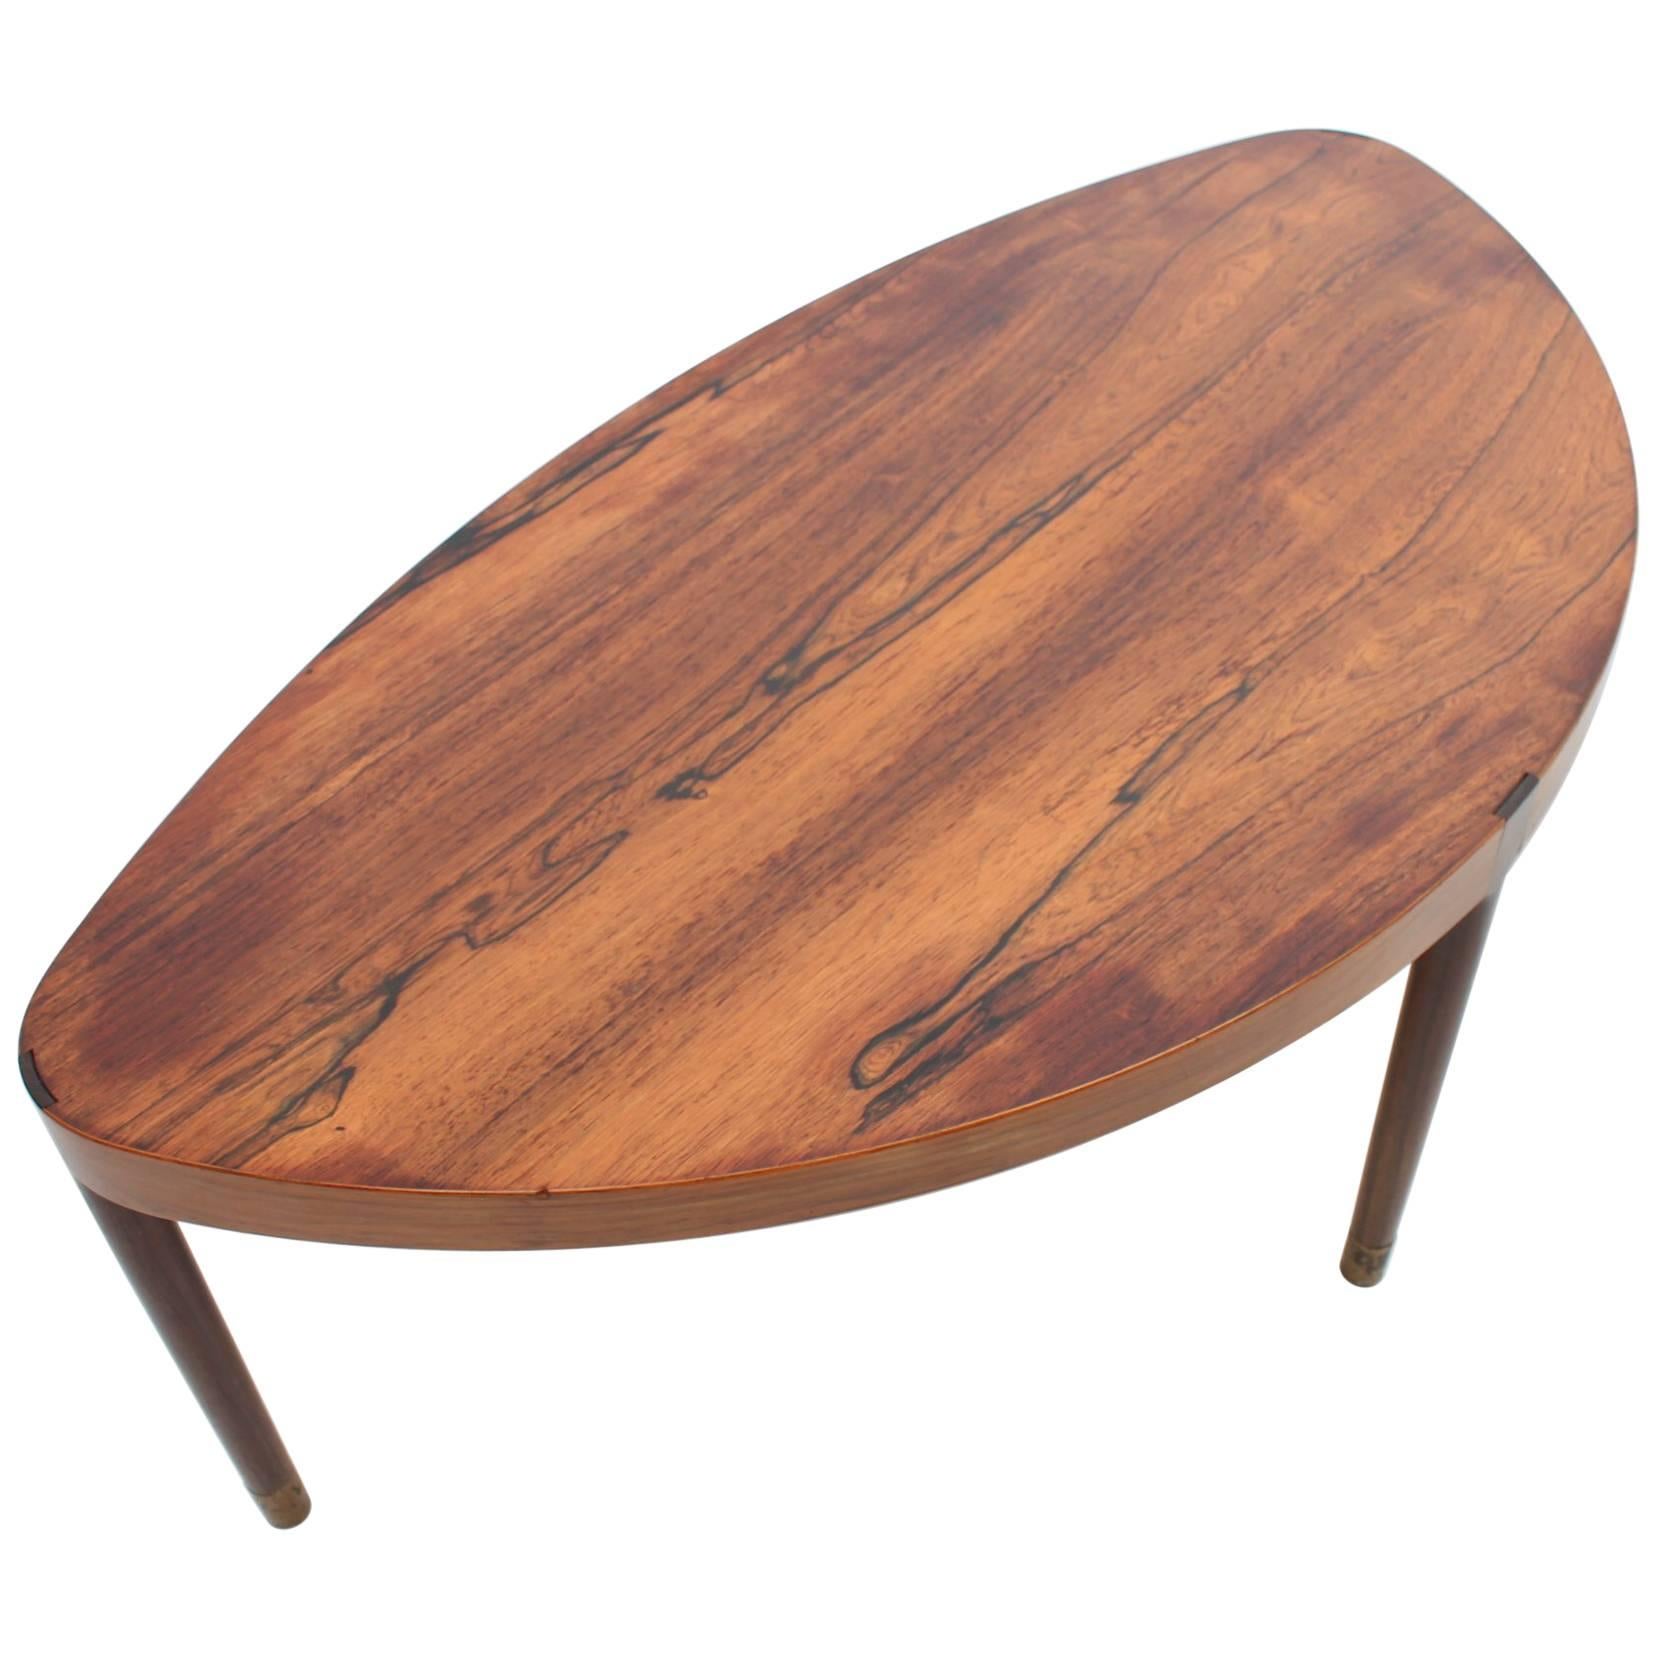 Oblong Rosewood Coffee Table with Brass Feet, Scandinavian Modern